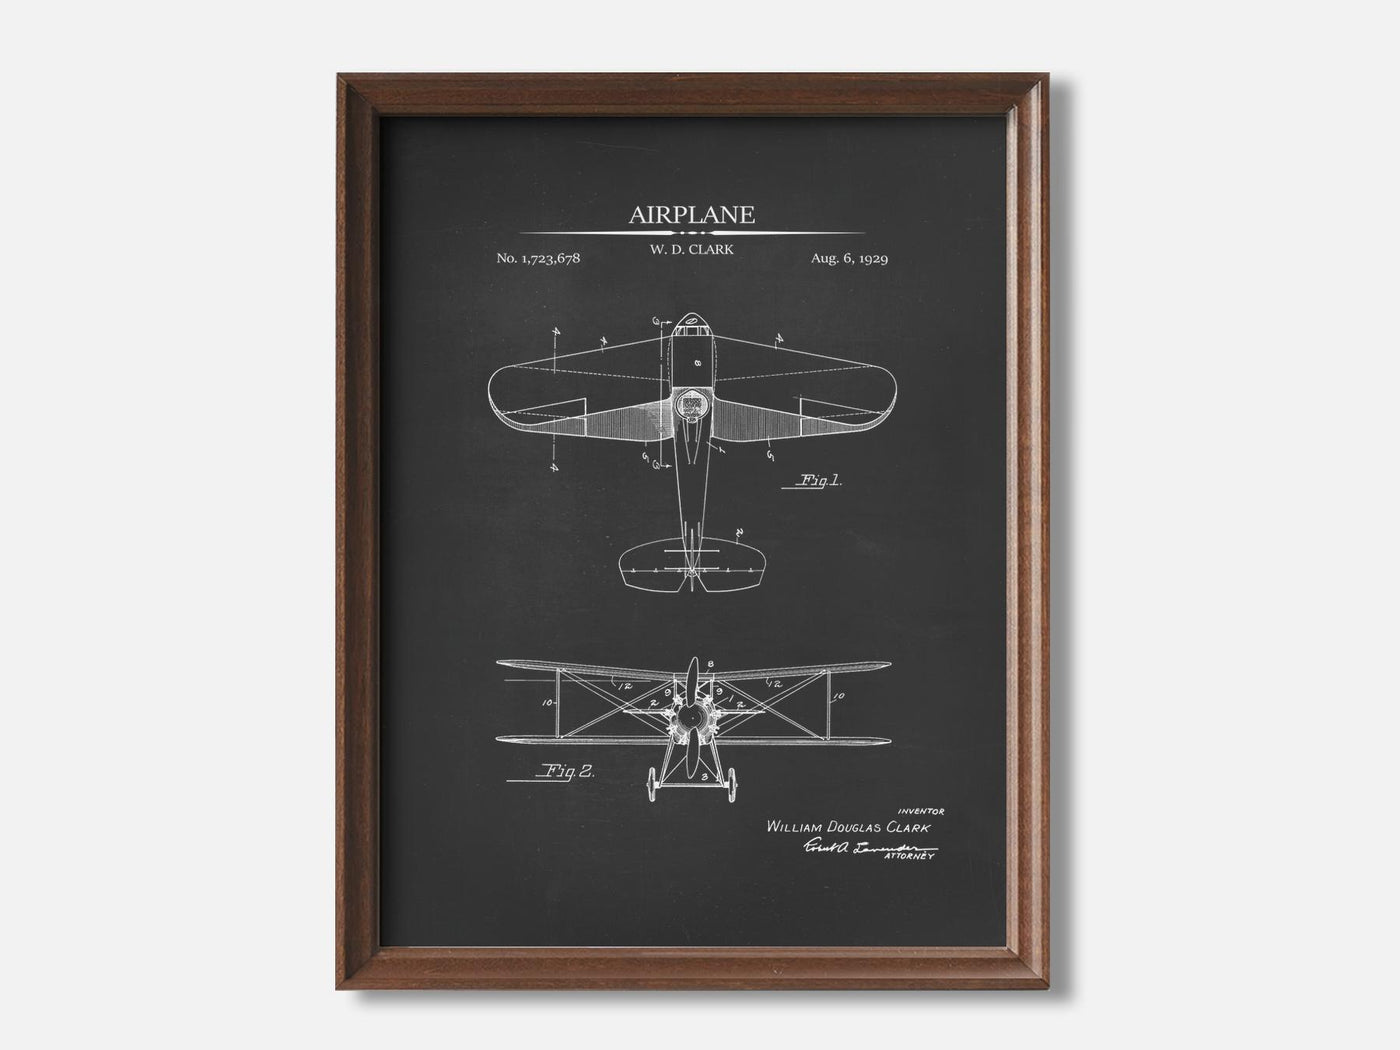 Vintage Airplane Patent Print mockup - A_t10118.2-V1-PC_F+WA-SS_1-PS_5x7-C_cha variant